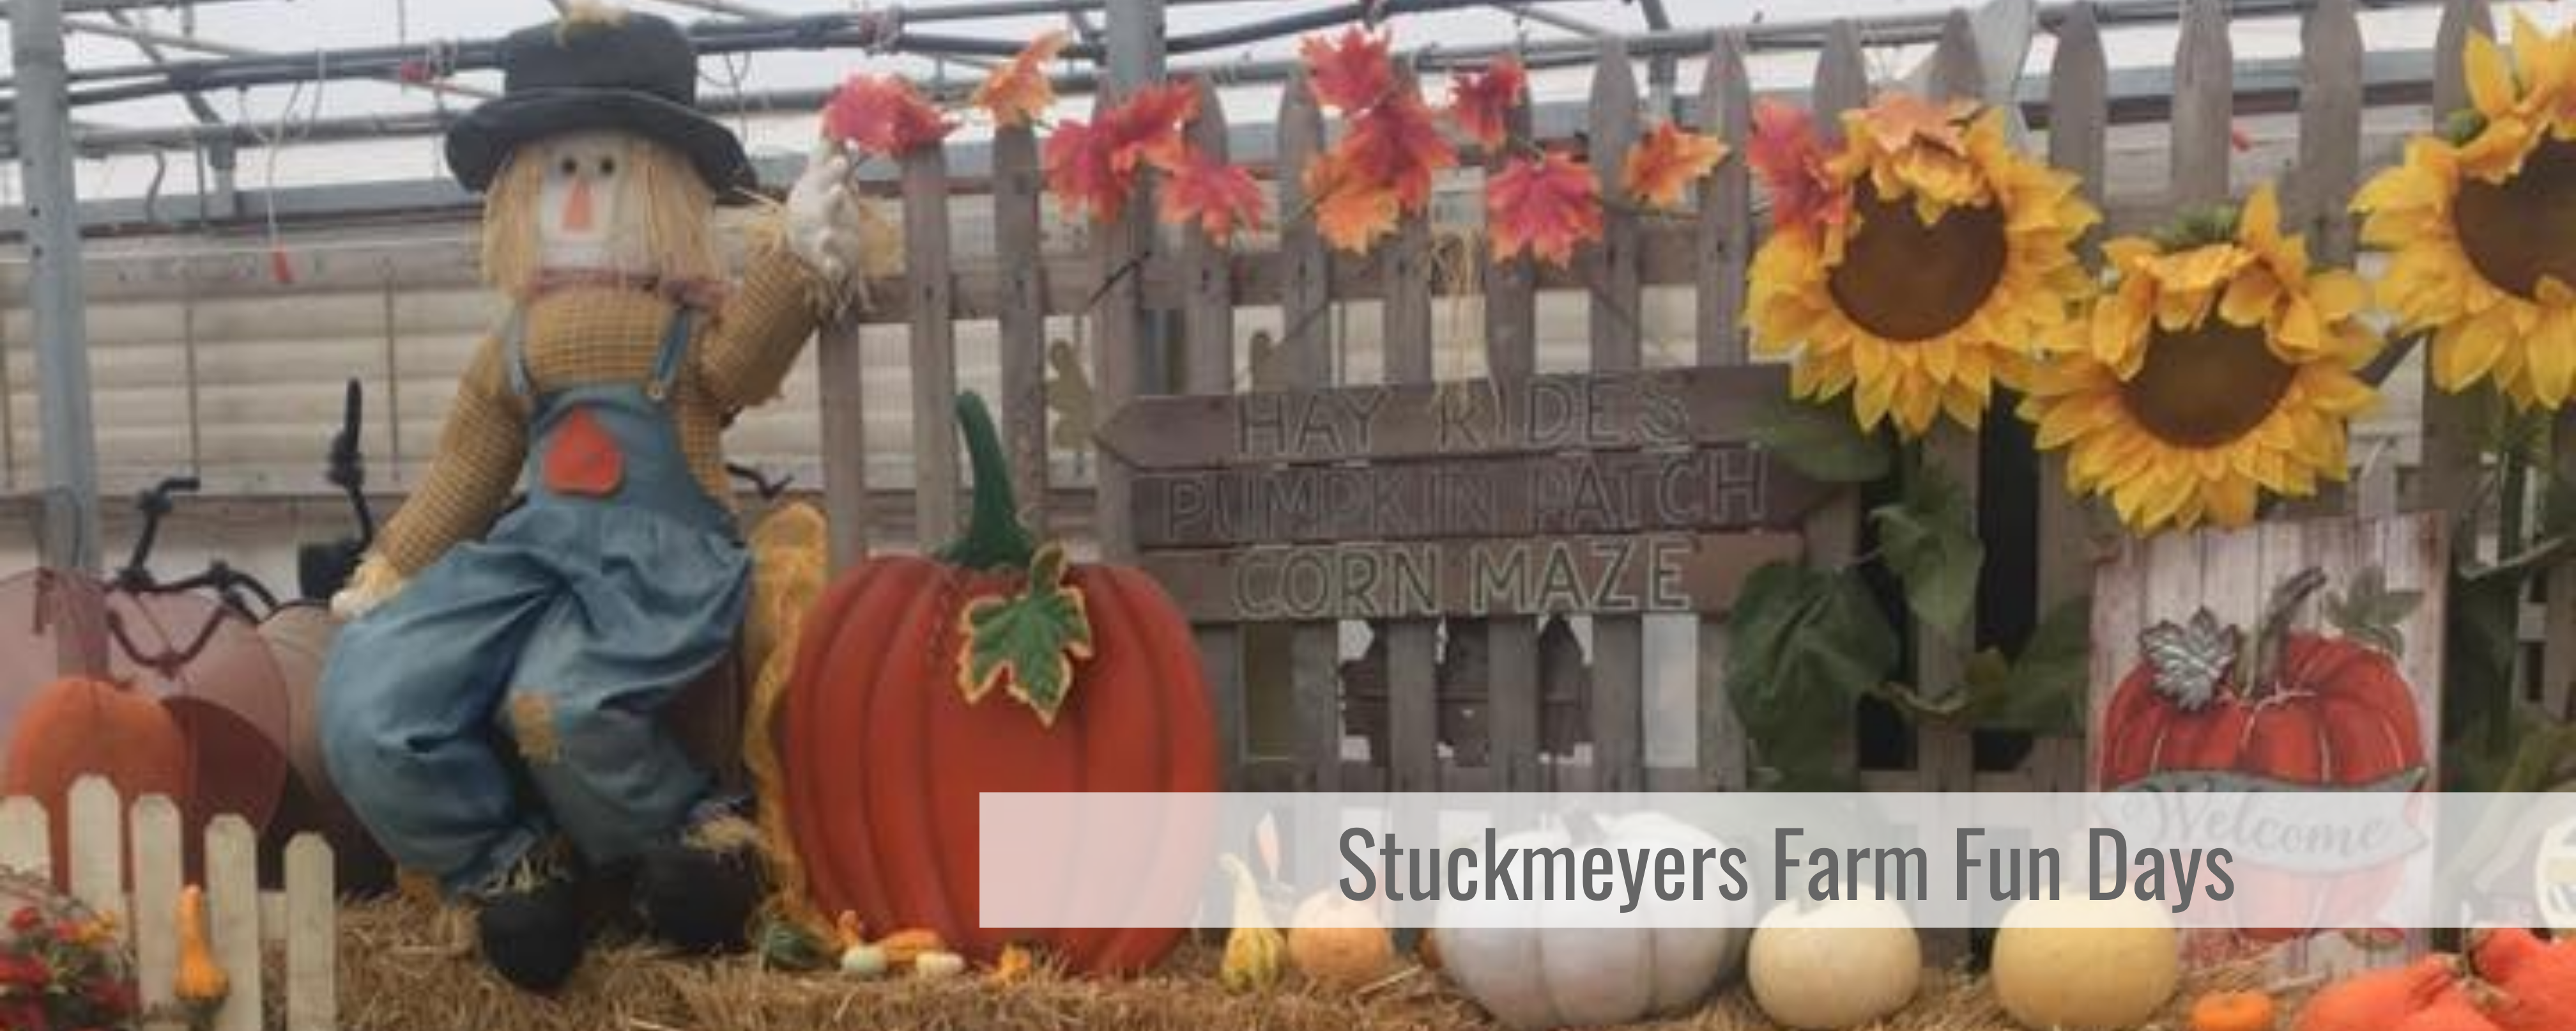 Stuckmeyers Farm